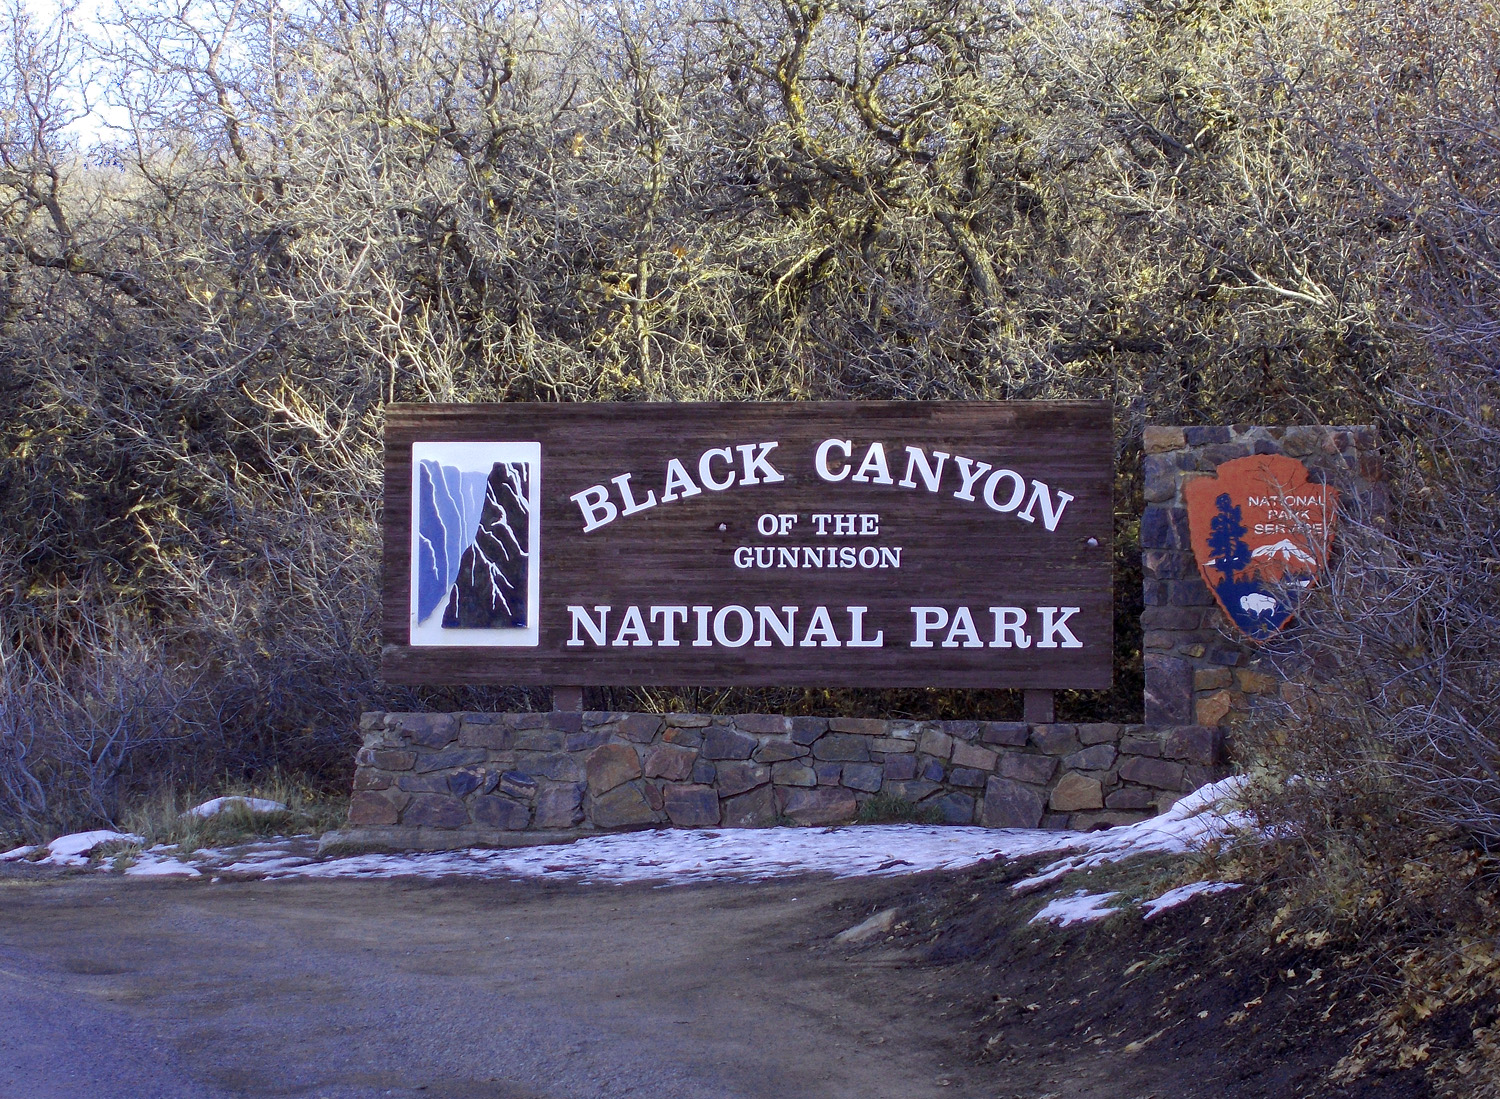 Black Canyon National Park